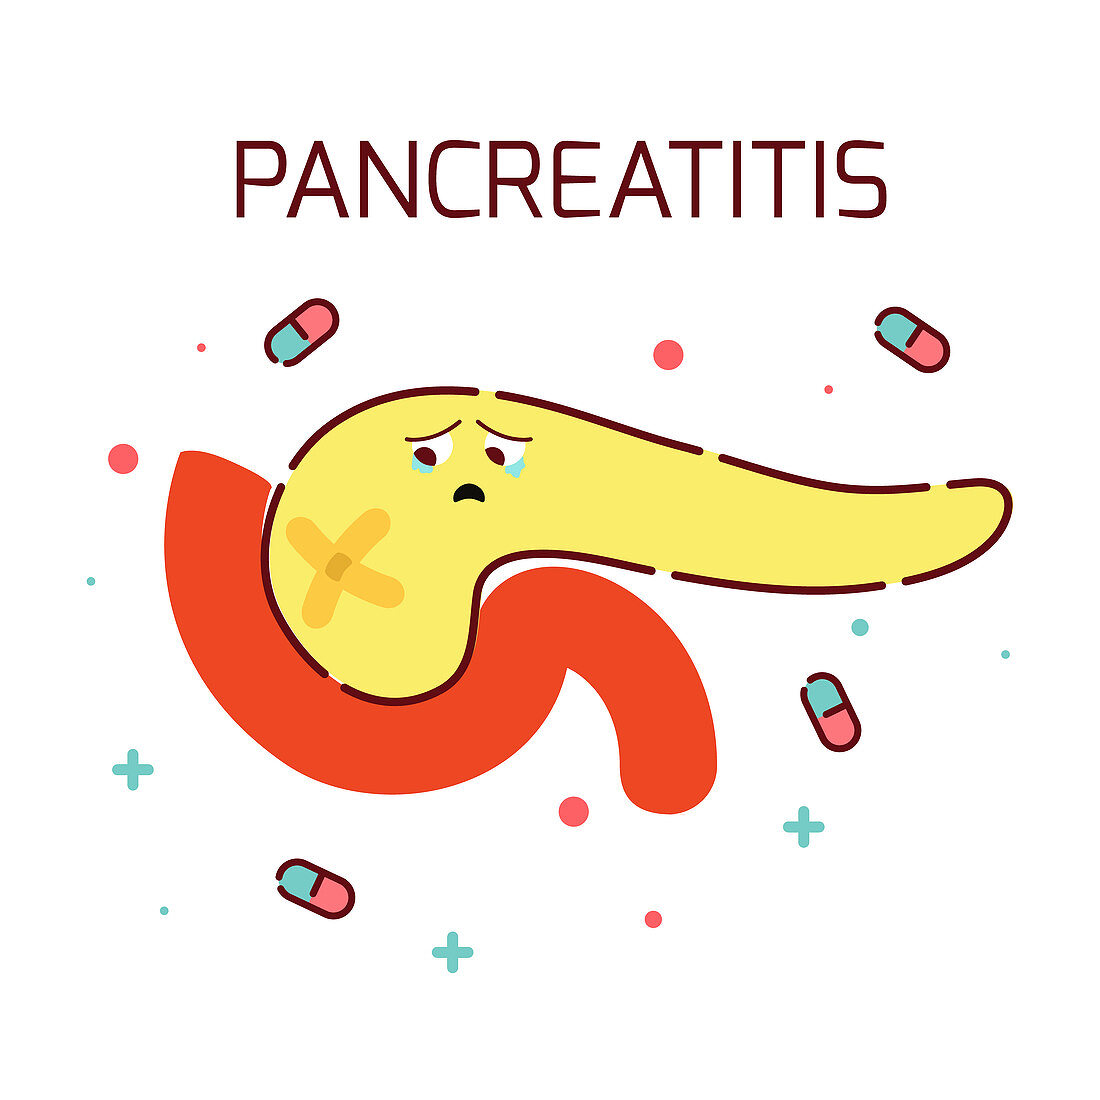 Pancreatitis, conceptual illustration